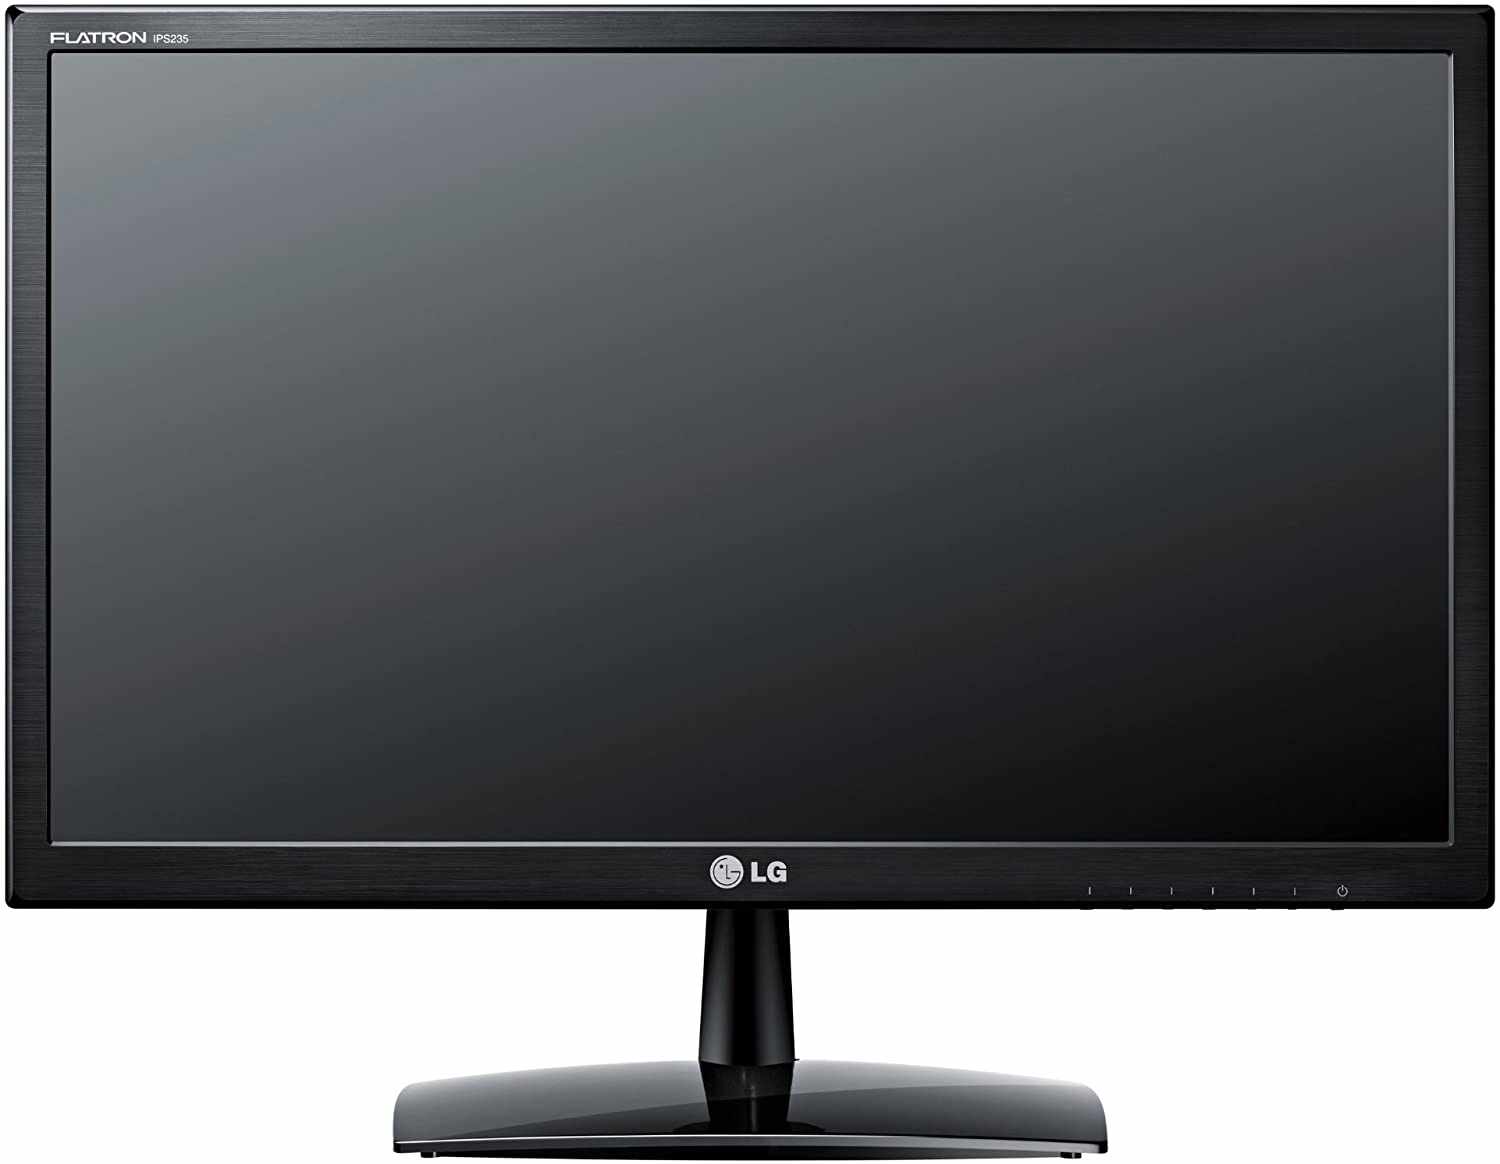 Monitor Refurbished LG Flatron E2210, 22 Inch LED, 1680 x 1050, VGA, DVI